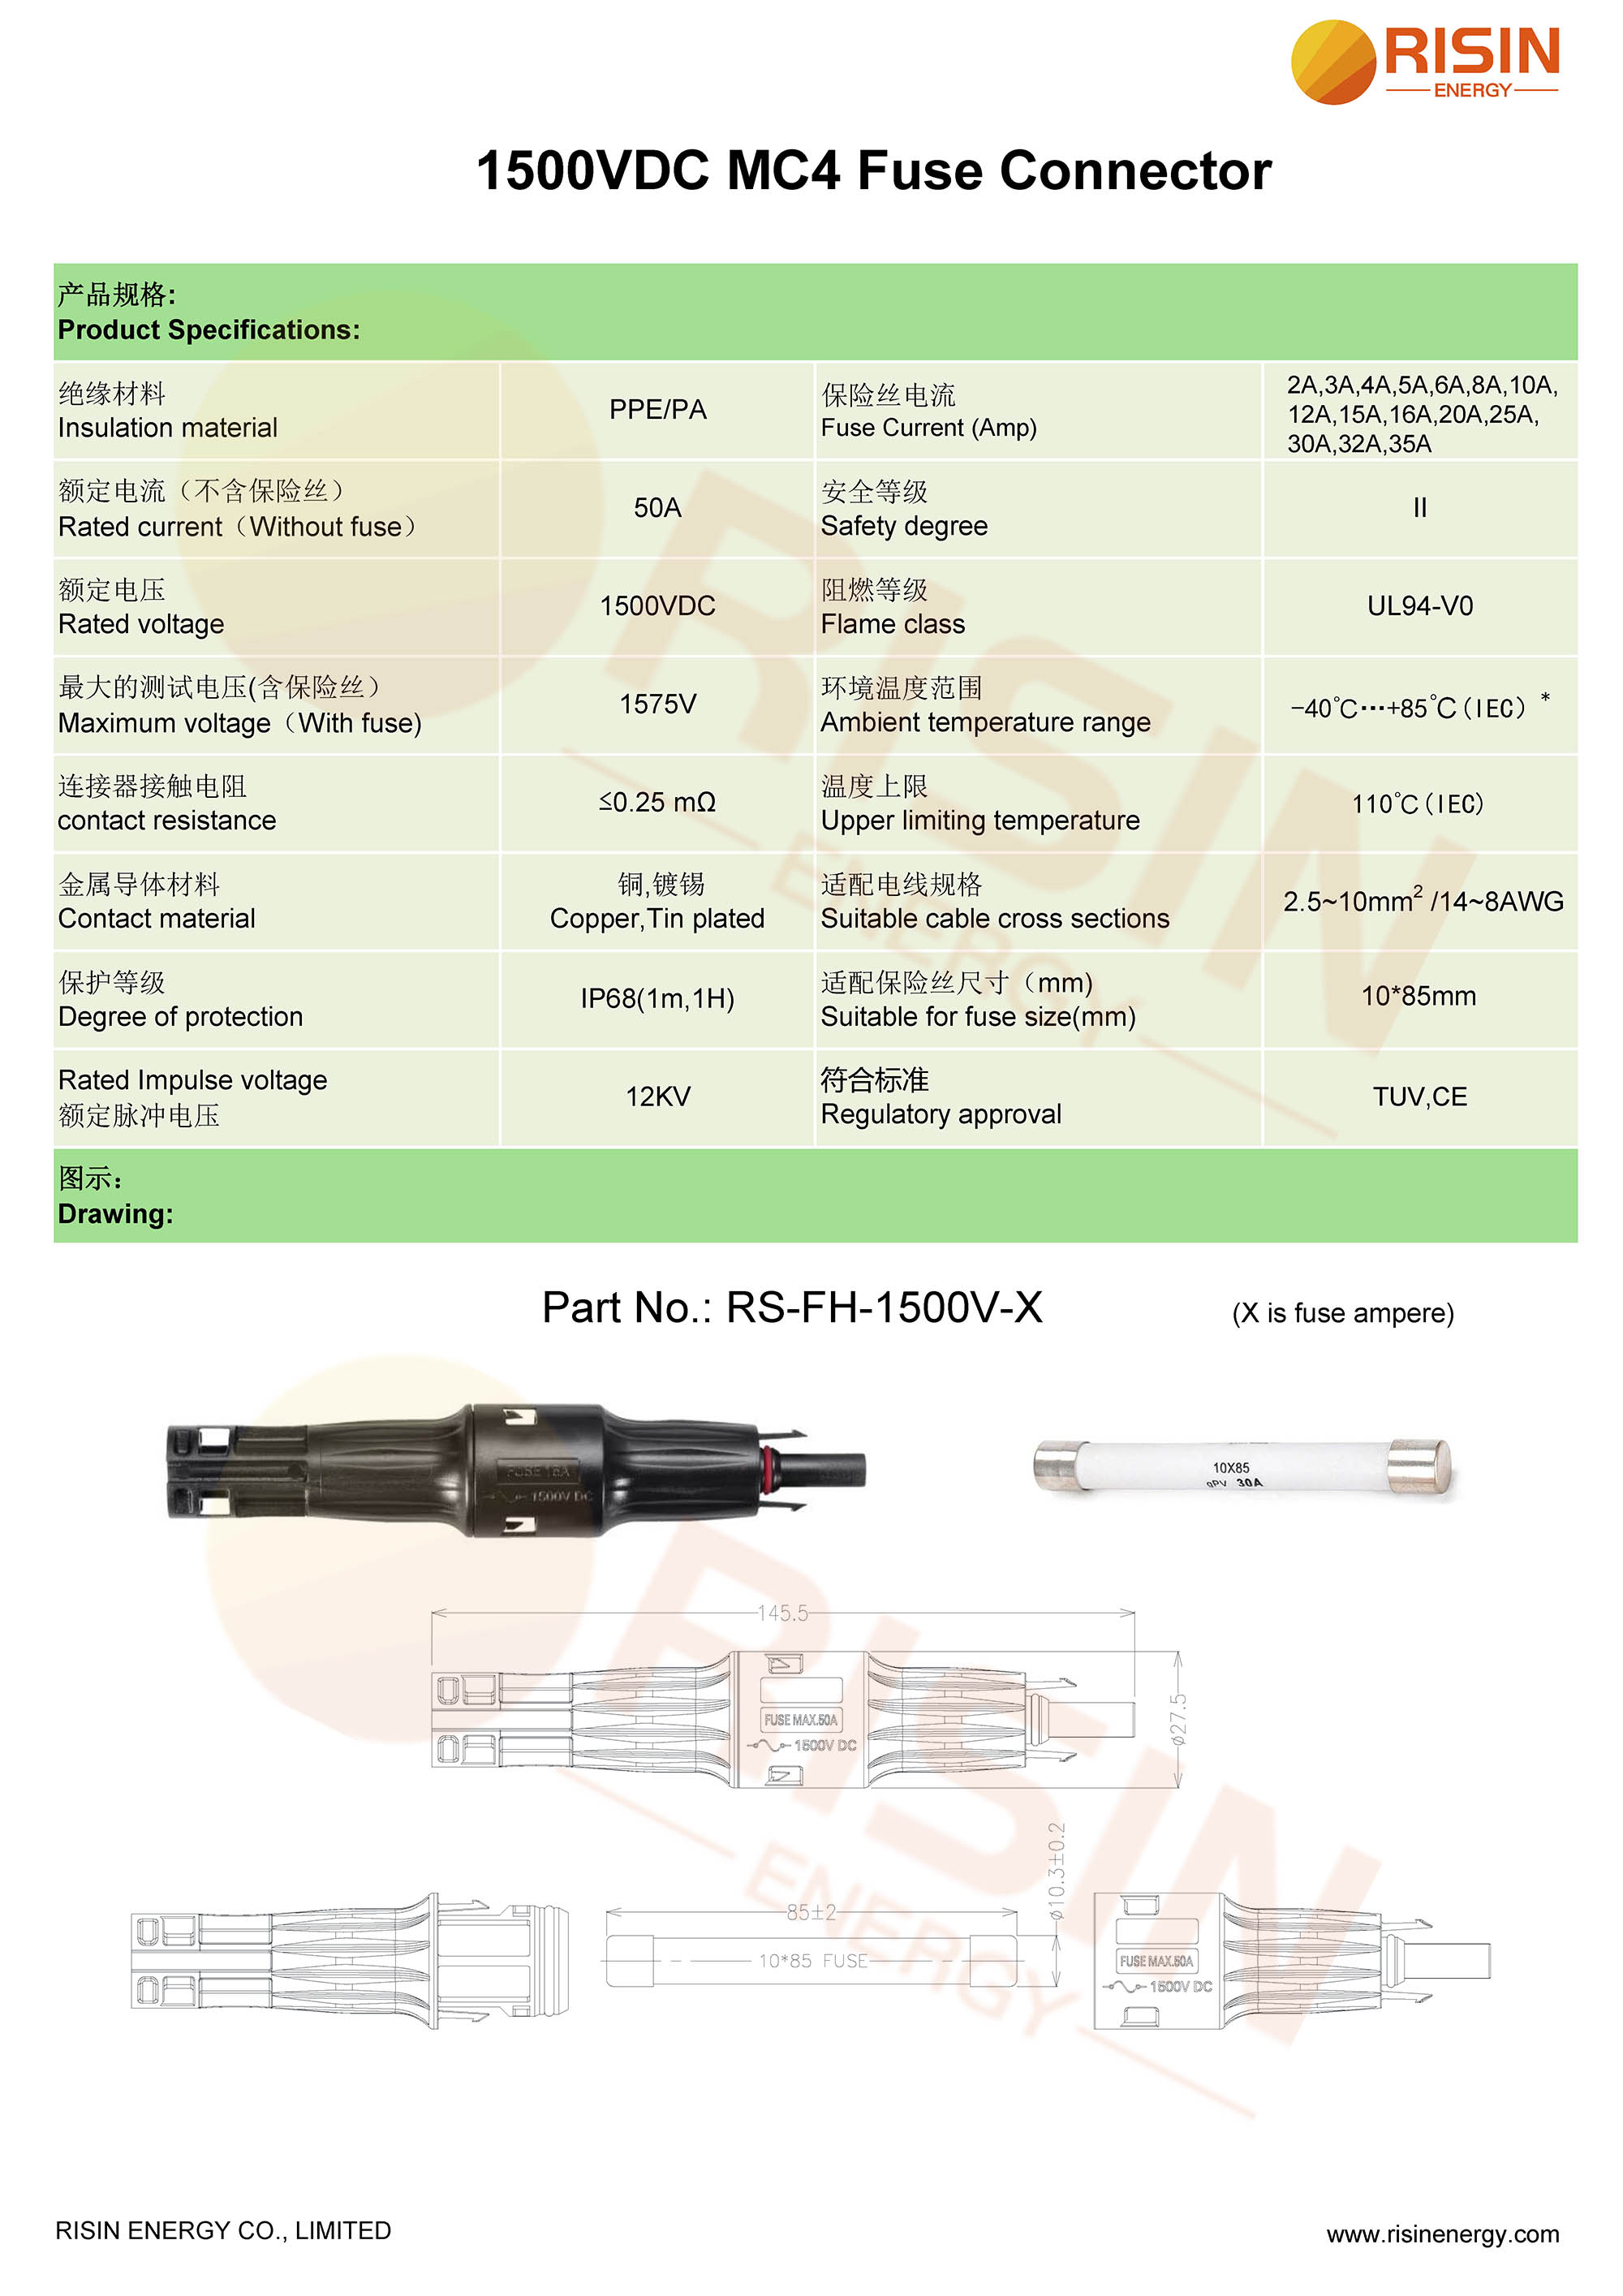 Risin spec. of 1500V MC4 Fuse